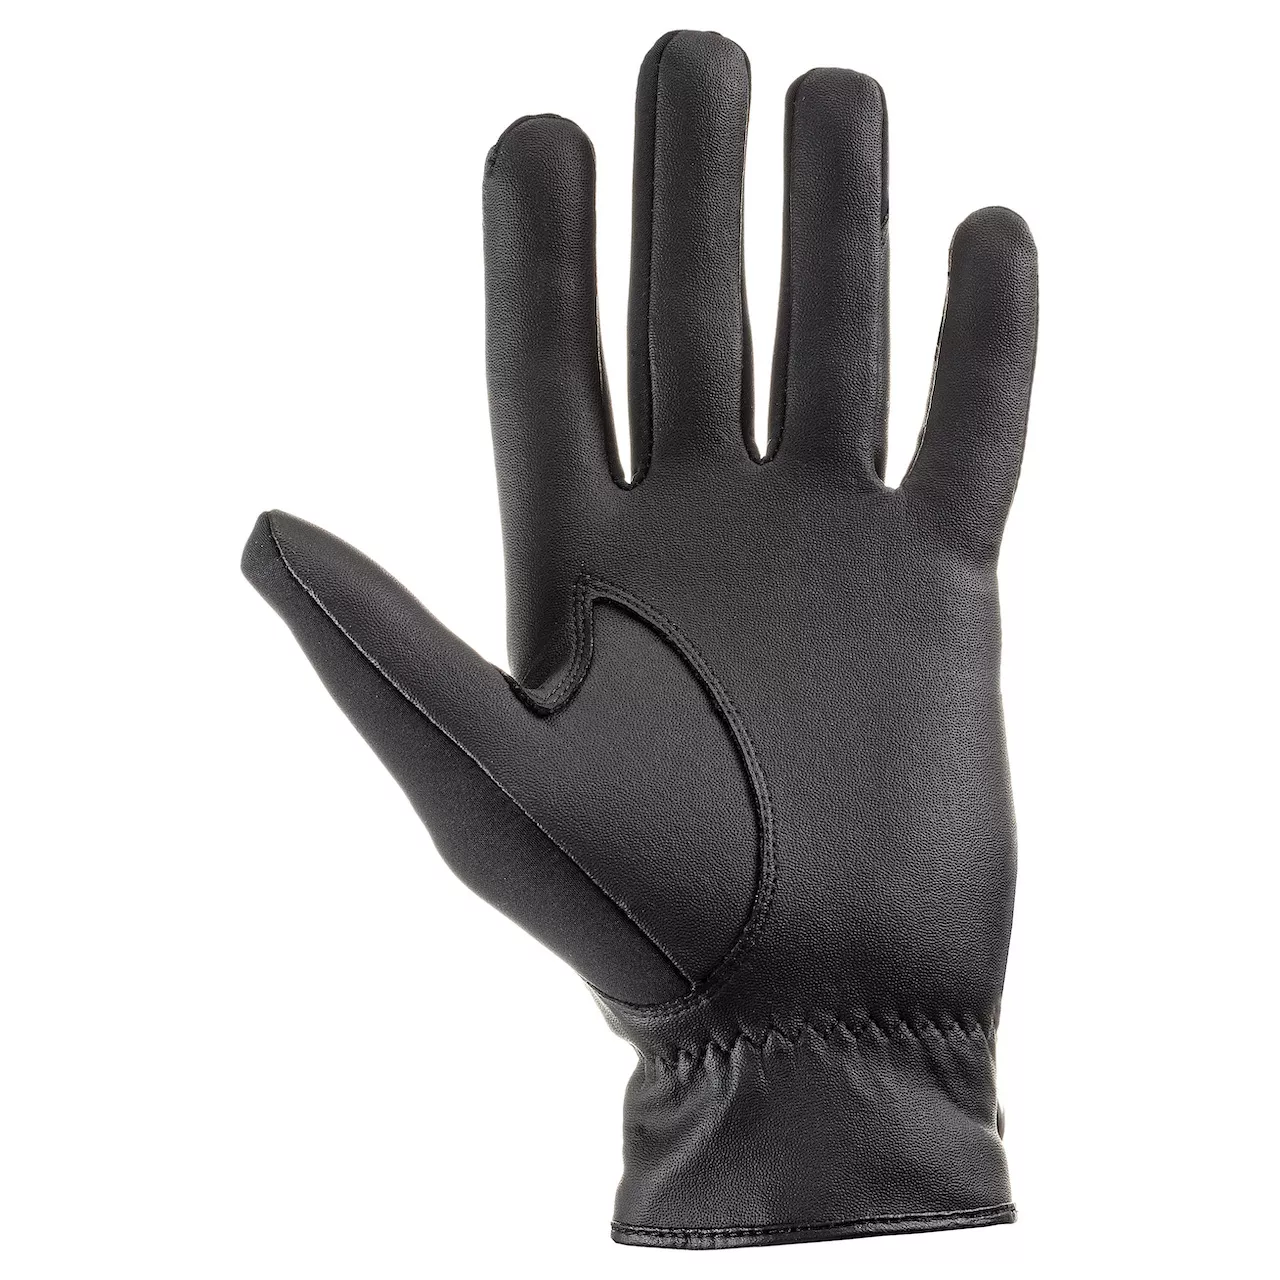 Winter riding glove crx700, black